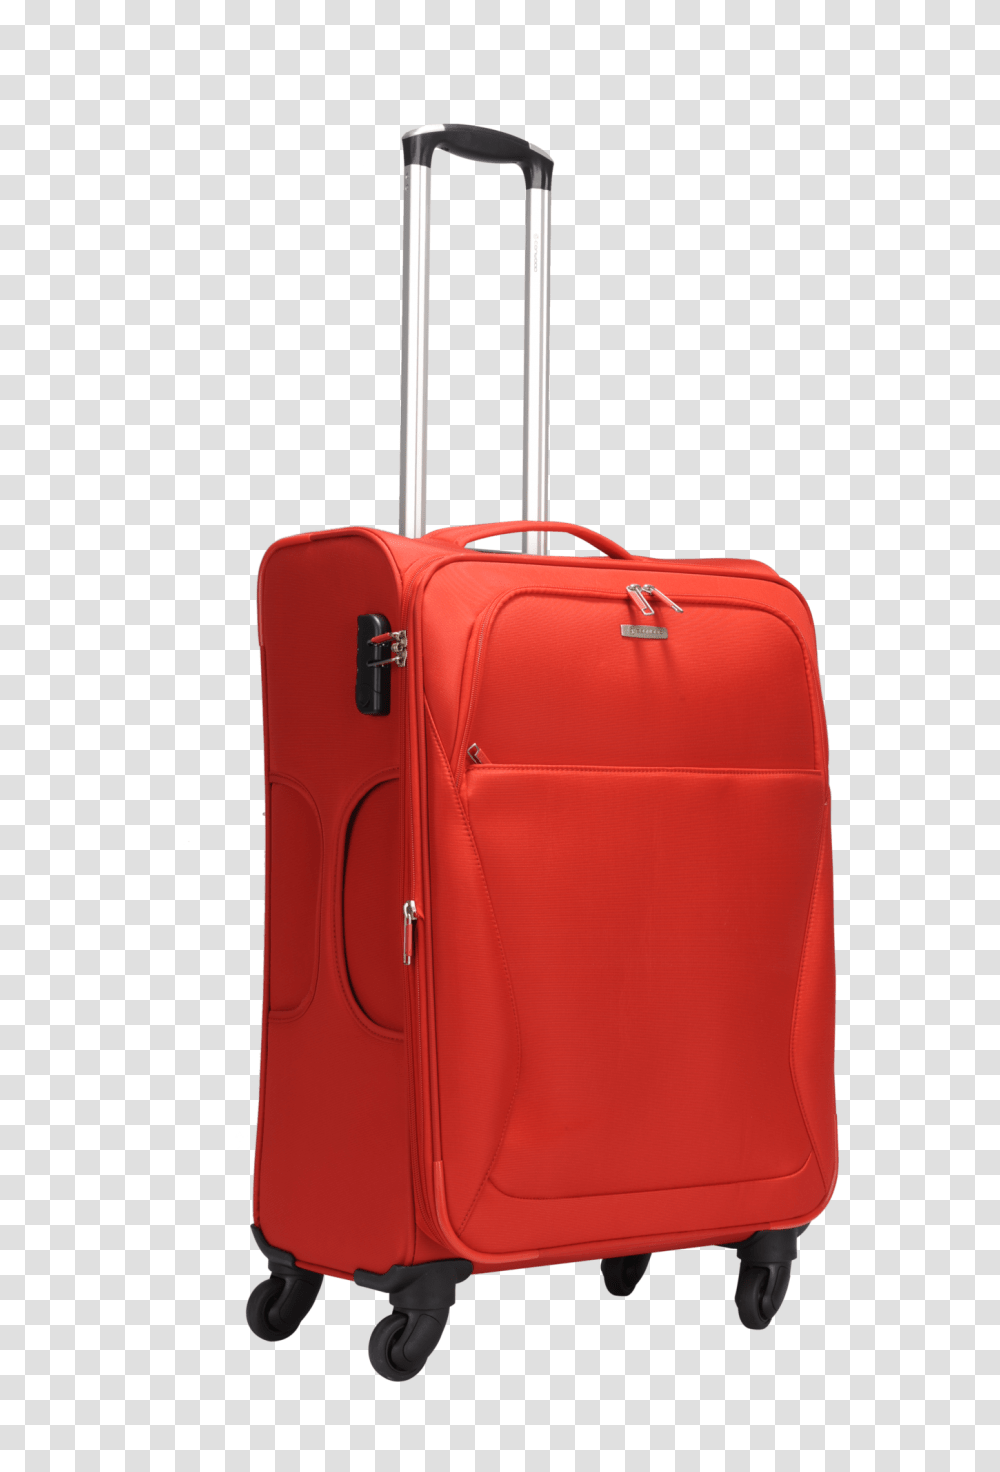 Luggage Suitcase Images Free Download, Backpack, Bag Transparent Png